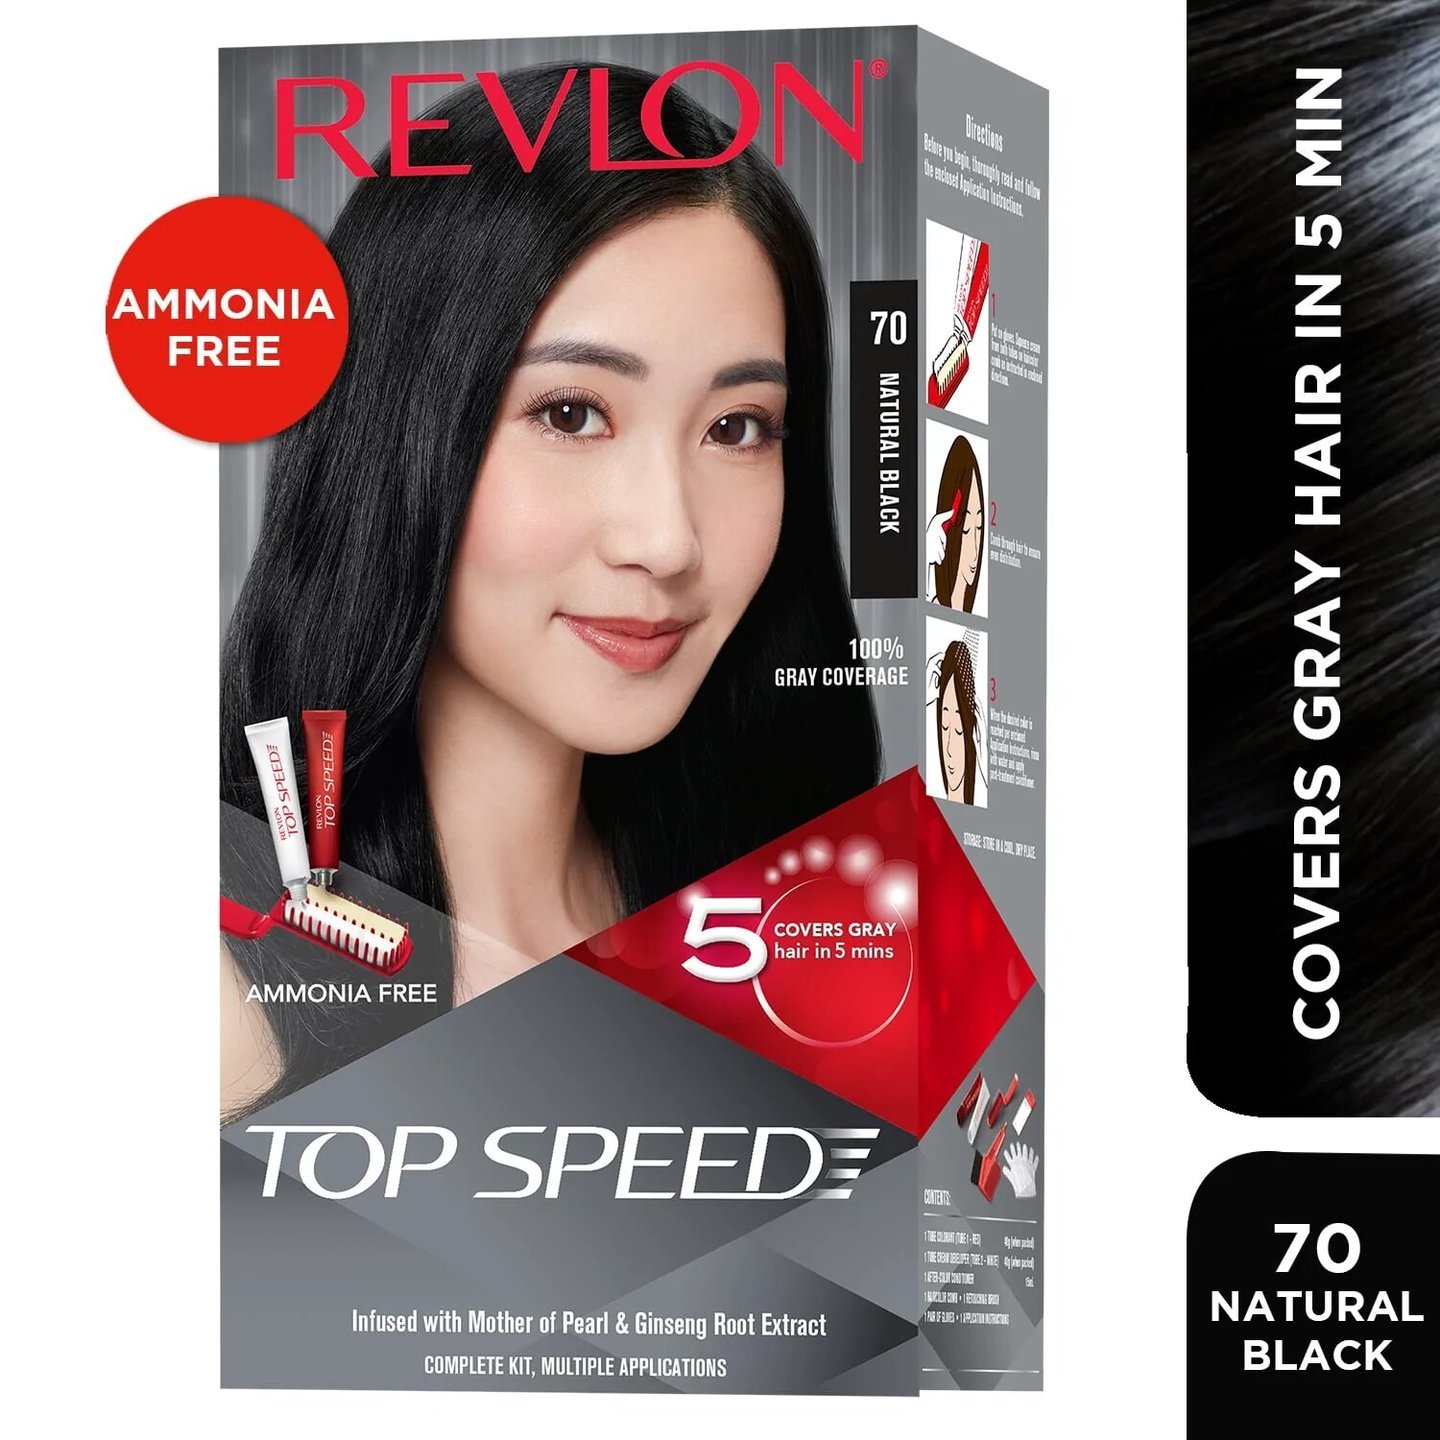 Revlon TOP SPEED NATURAL BLACK 70 Hair Color